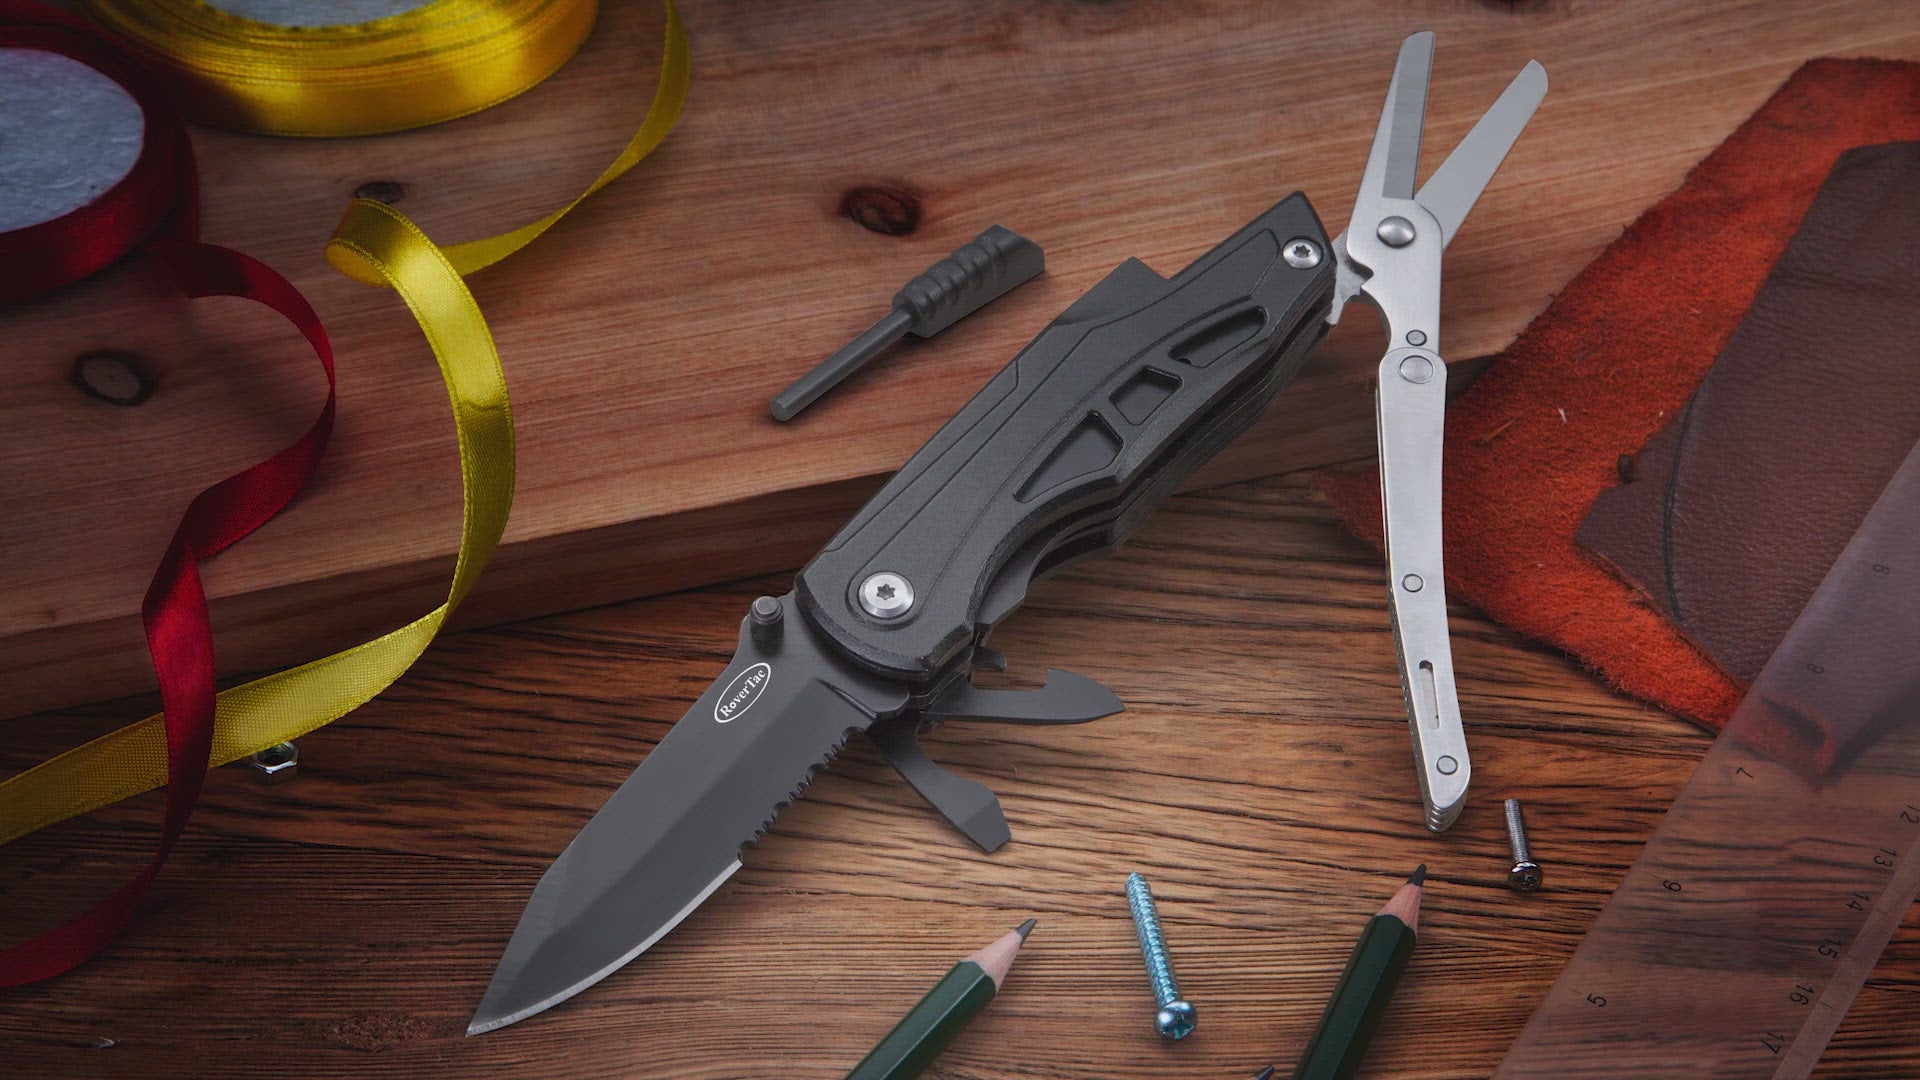 Multitool Pocket Knife Folding,Camping Survival EDC Safety Lock Blade Scissors Fire Starter Whsitle Bottle Opener Pocket Clip